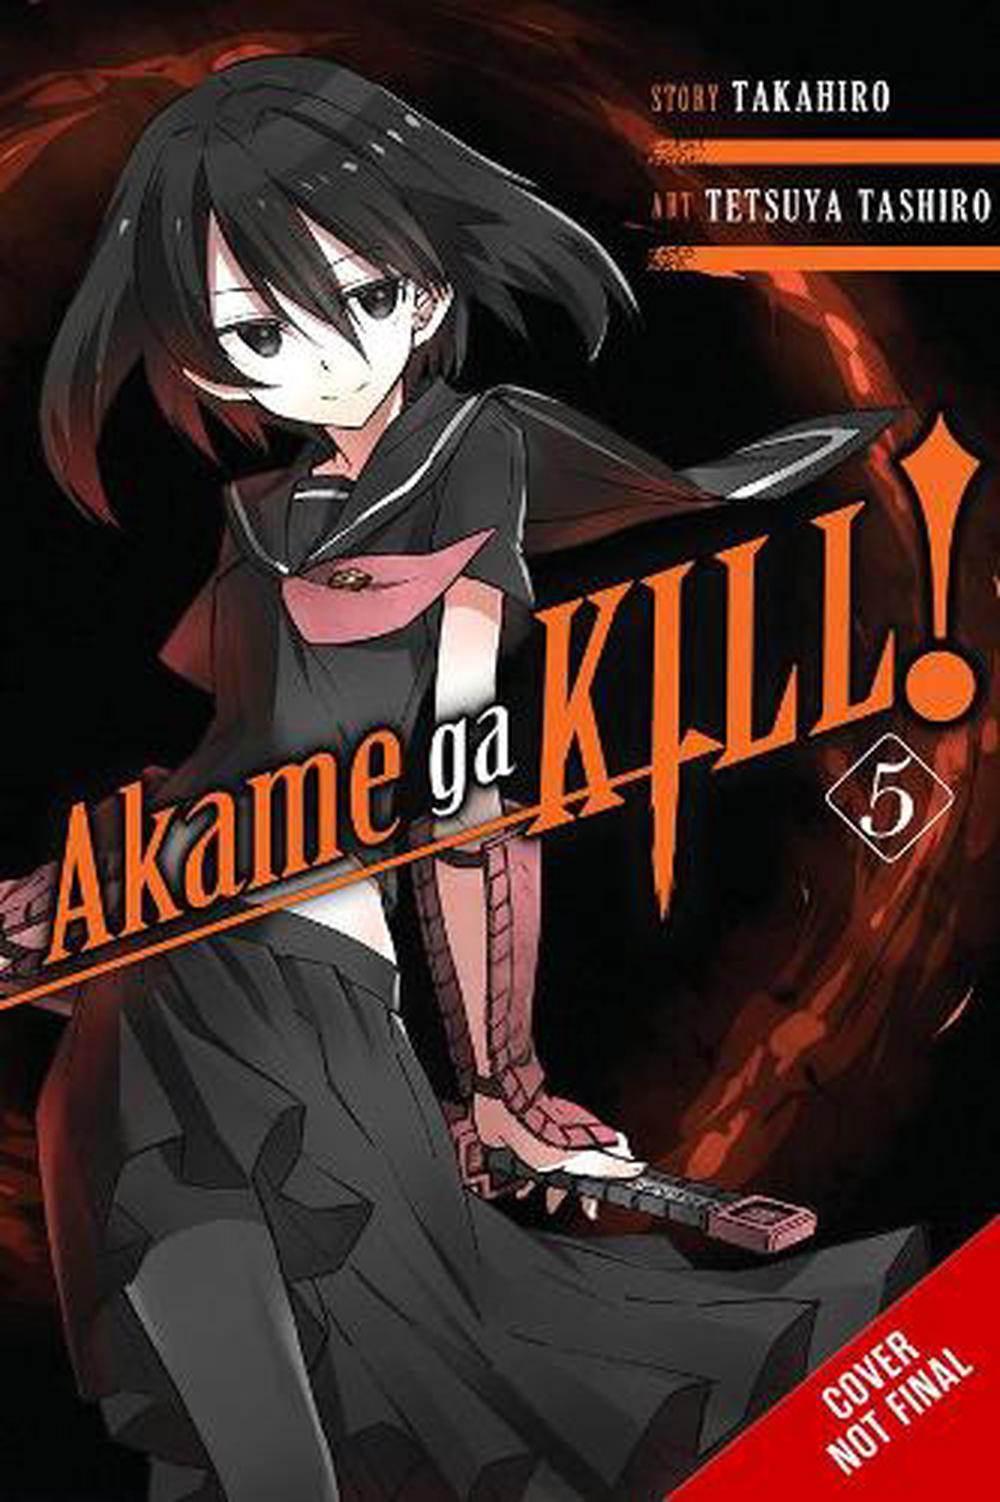 Akame Ga Kill!, Volume 5 by Takahiro (English) Paperback Book Free ...